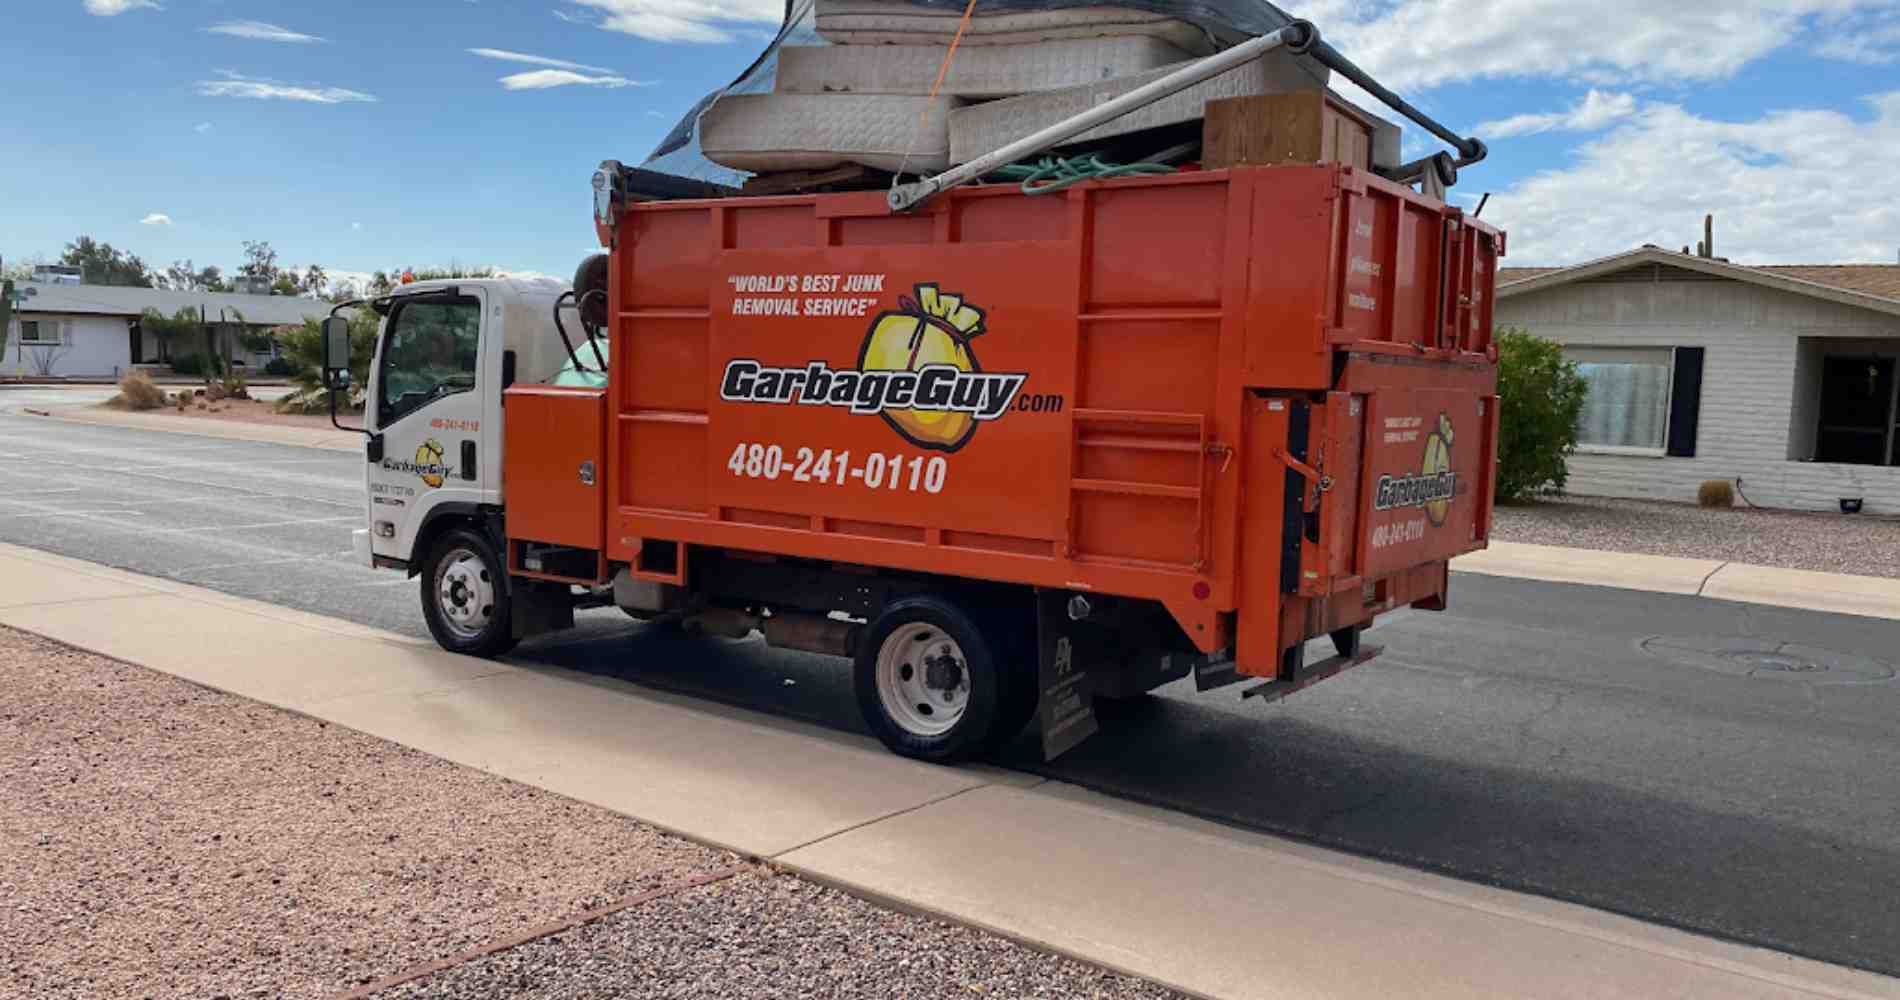 Curbside Trash Pickup in Chandler, AZ